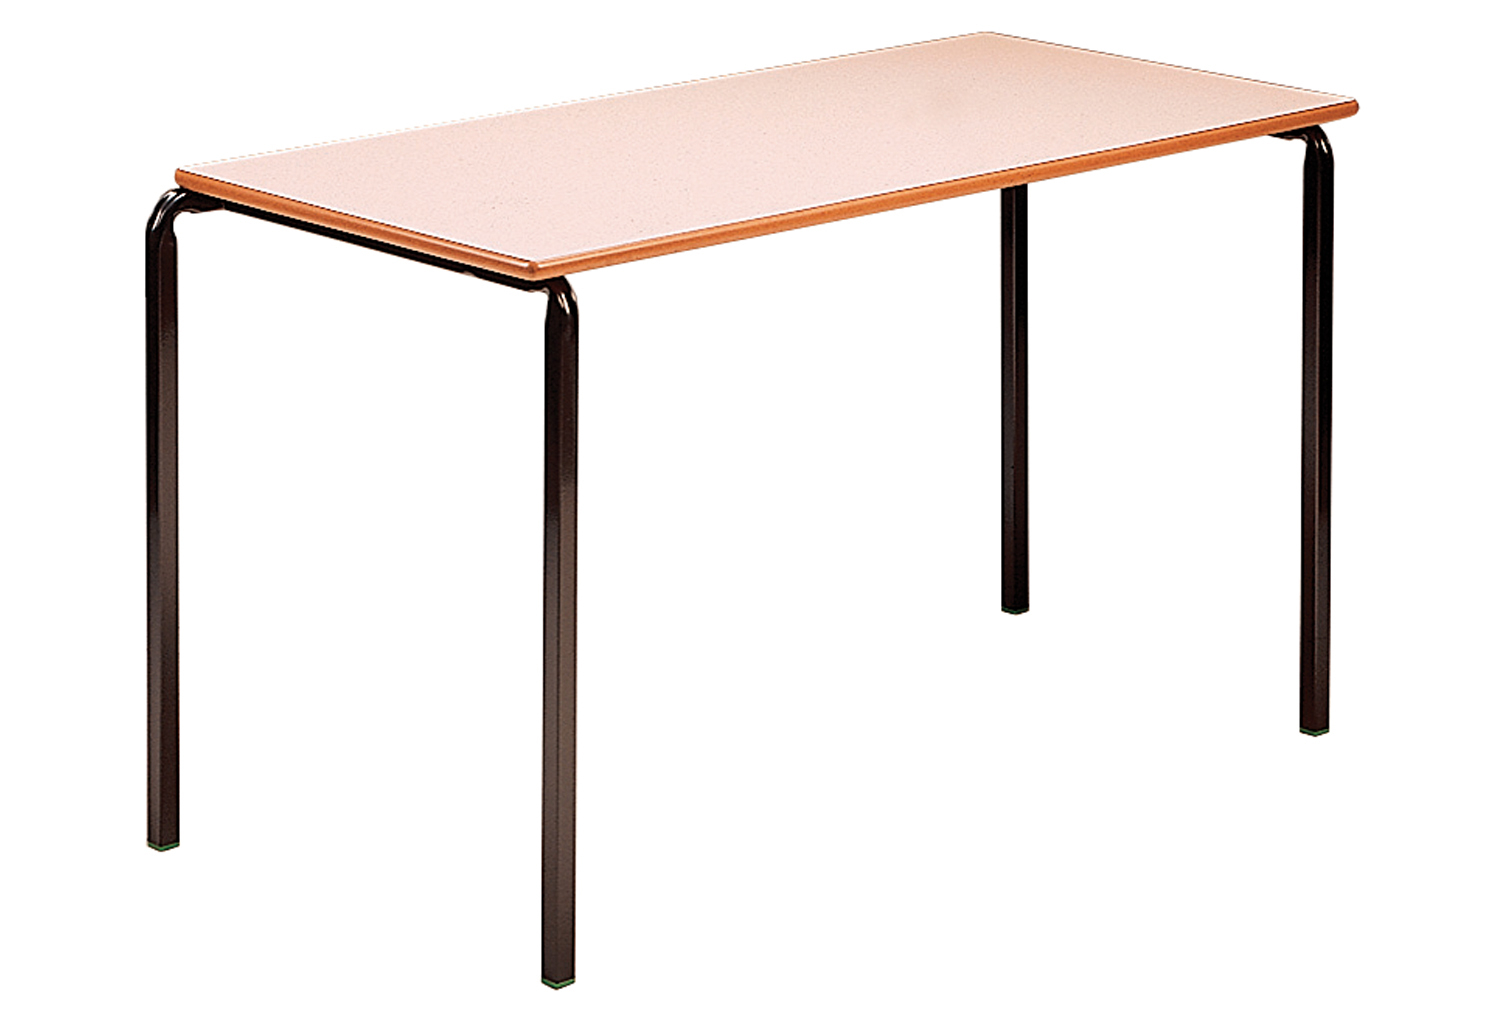 Qty 4 - Rectangular Crush Bent Classroom Tables 14+ Years, 120wx60dx76h (cm), Charcoal Frame, Grey Top, PU Green Edge